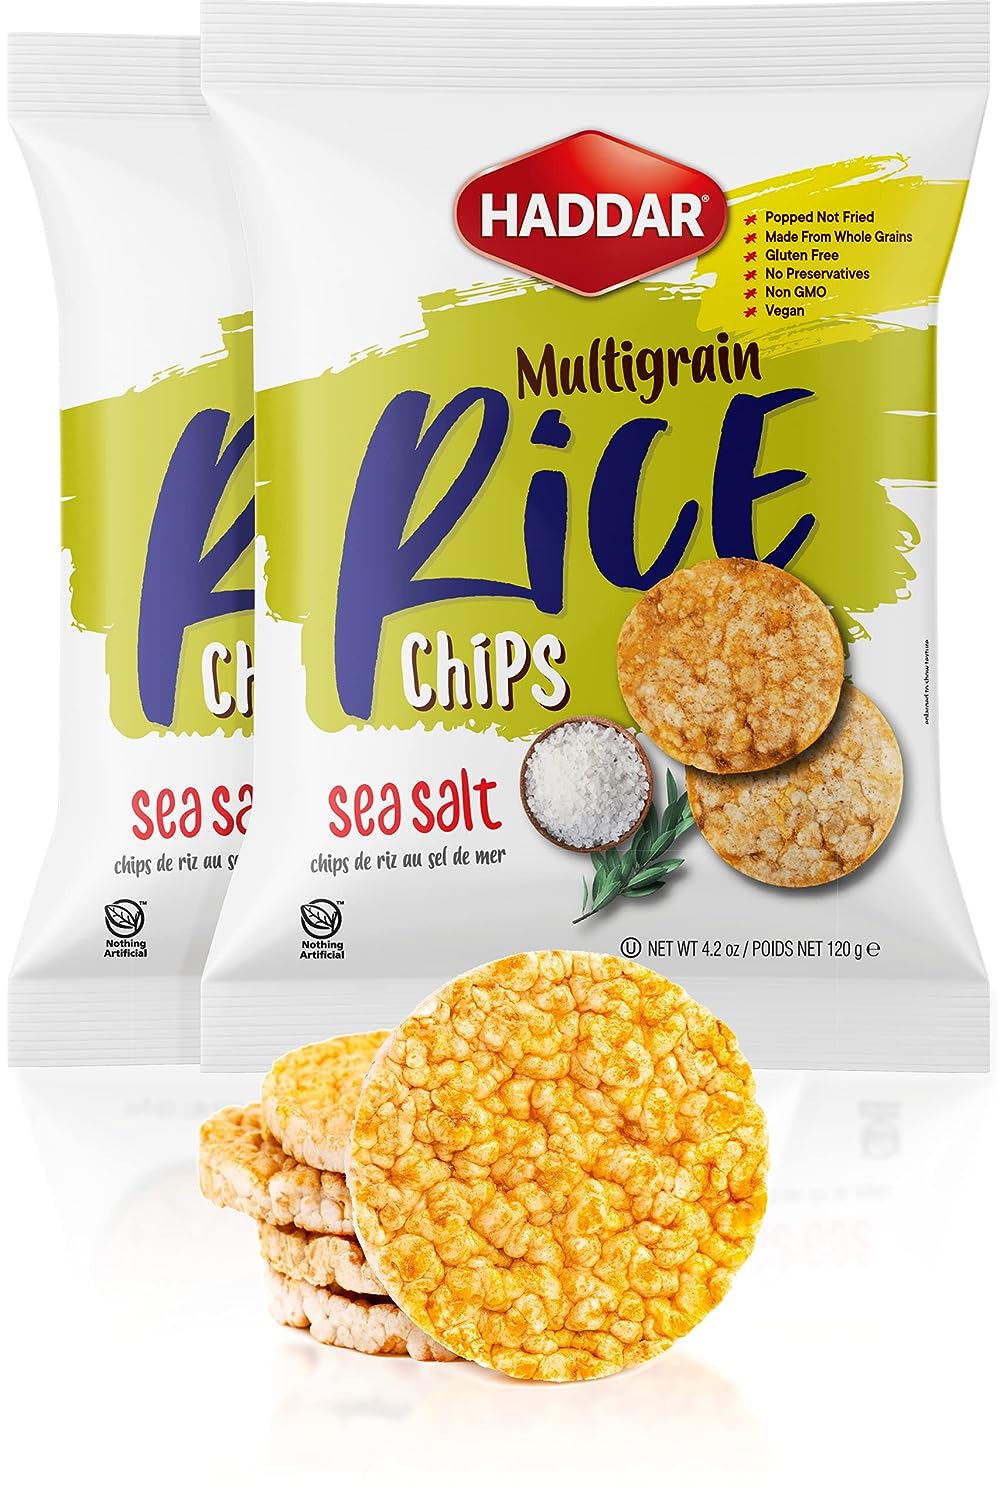 Haddar Multigrain Sea Salt Rice Chips 120 g - Gluten Free - Low Fat - Non GMO